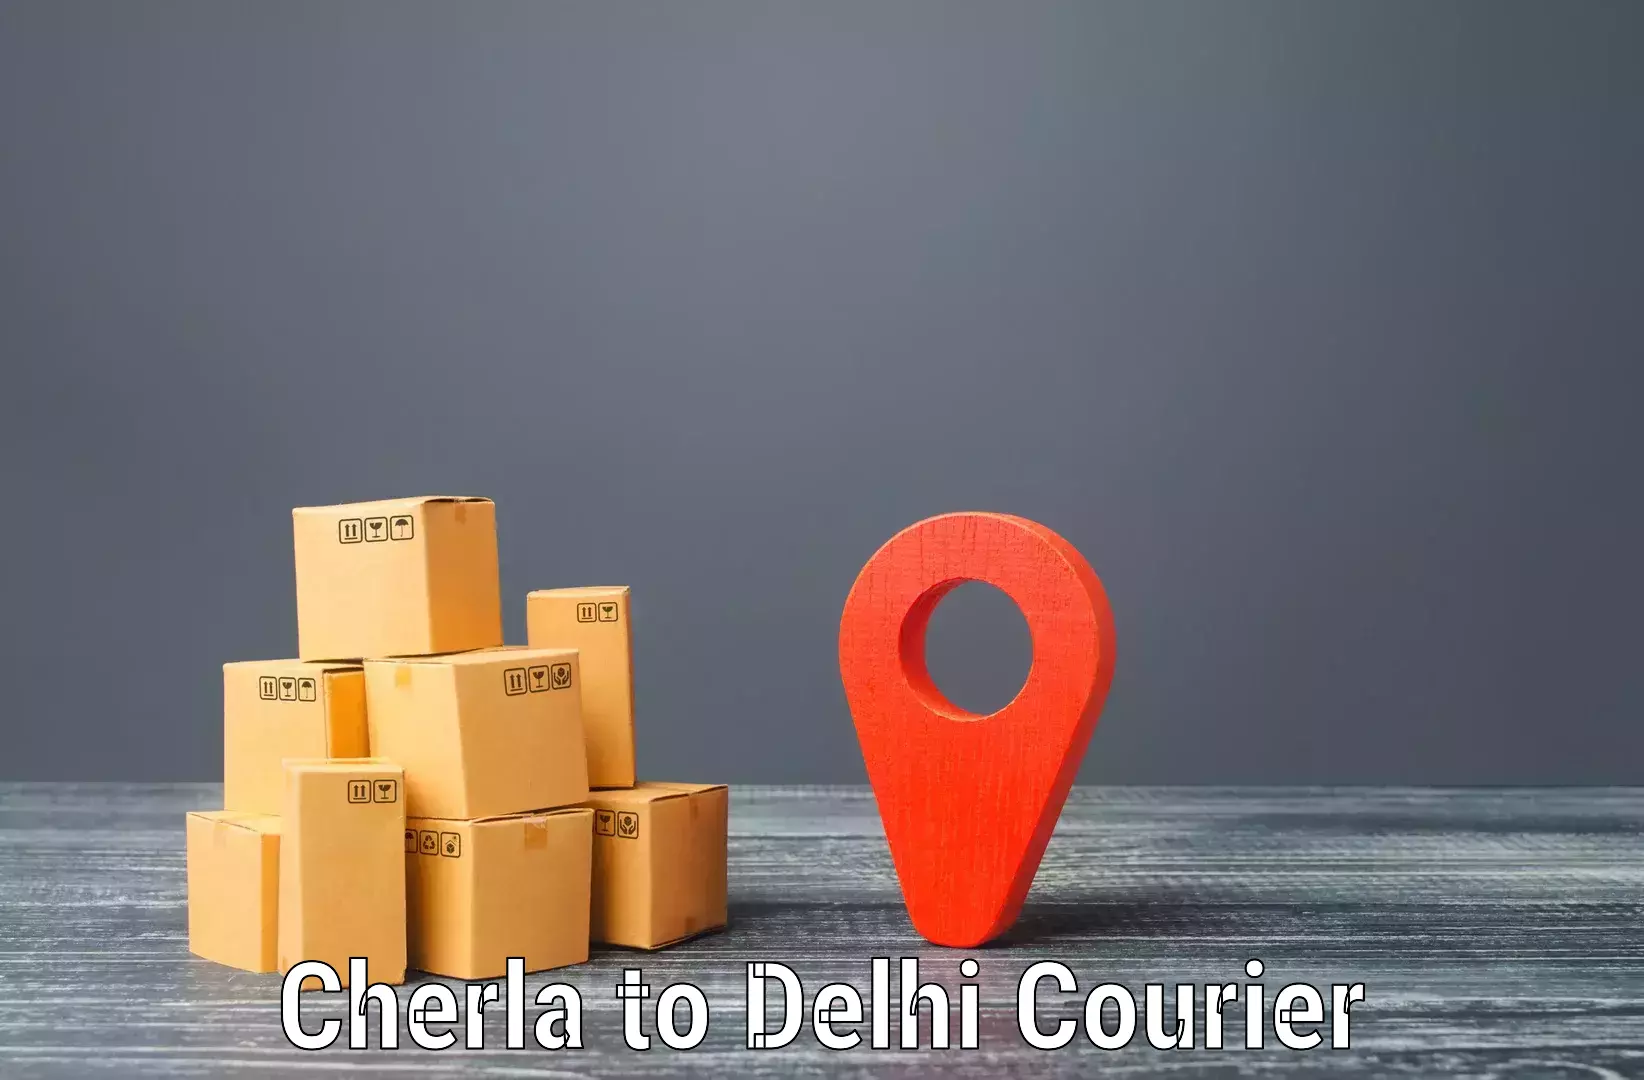 Sustainable delivery practices Cherla to University of Delhi